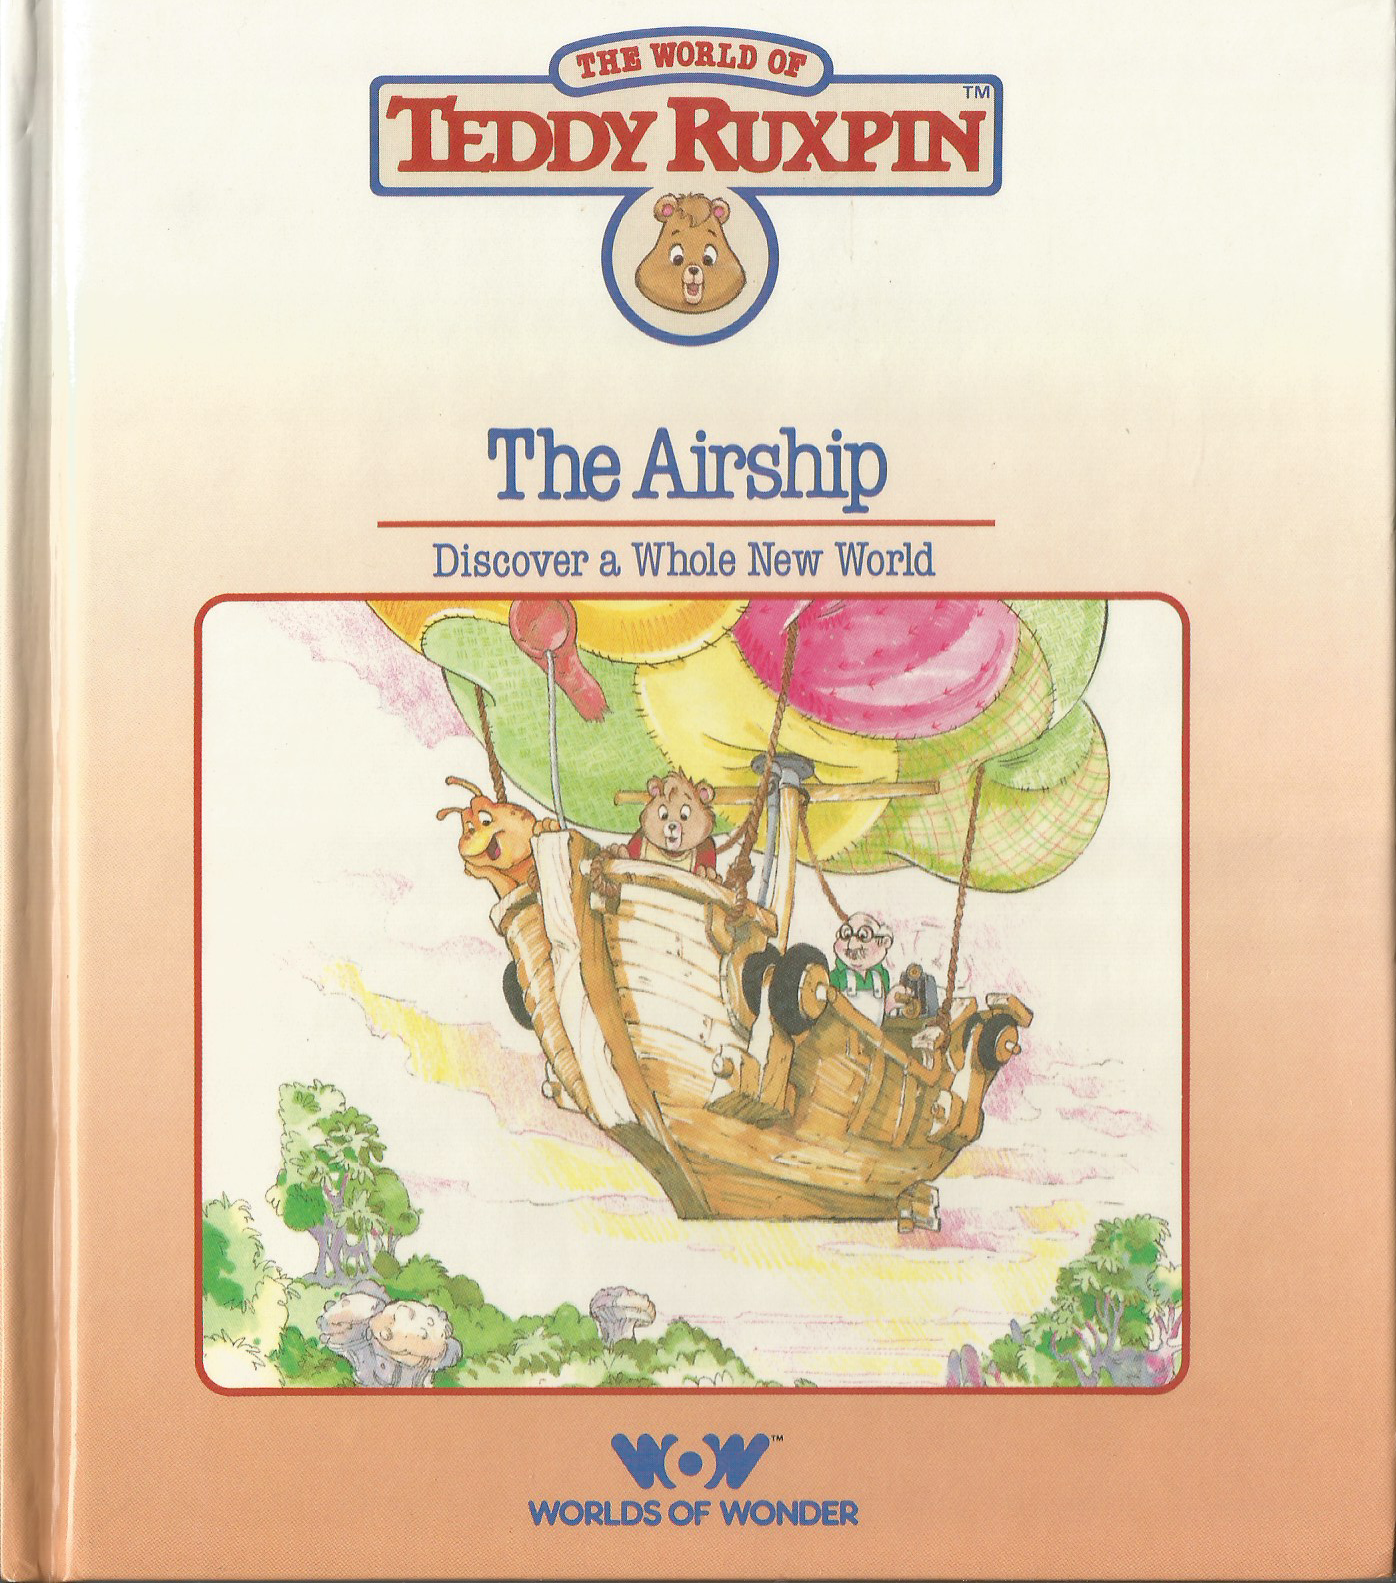 teddy ruxpin airship toy